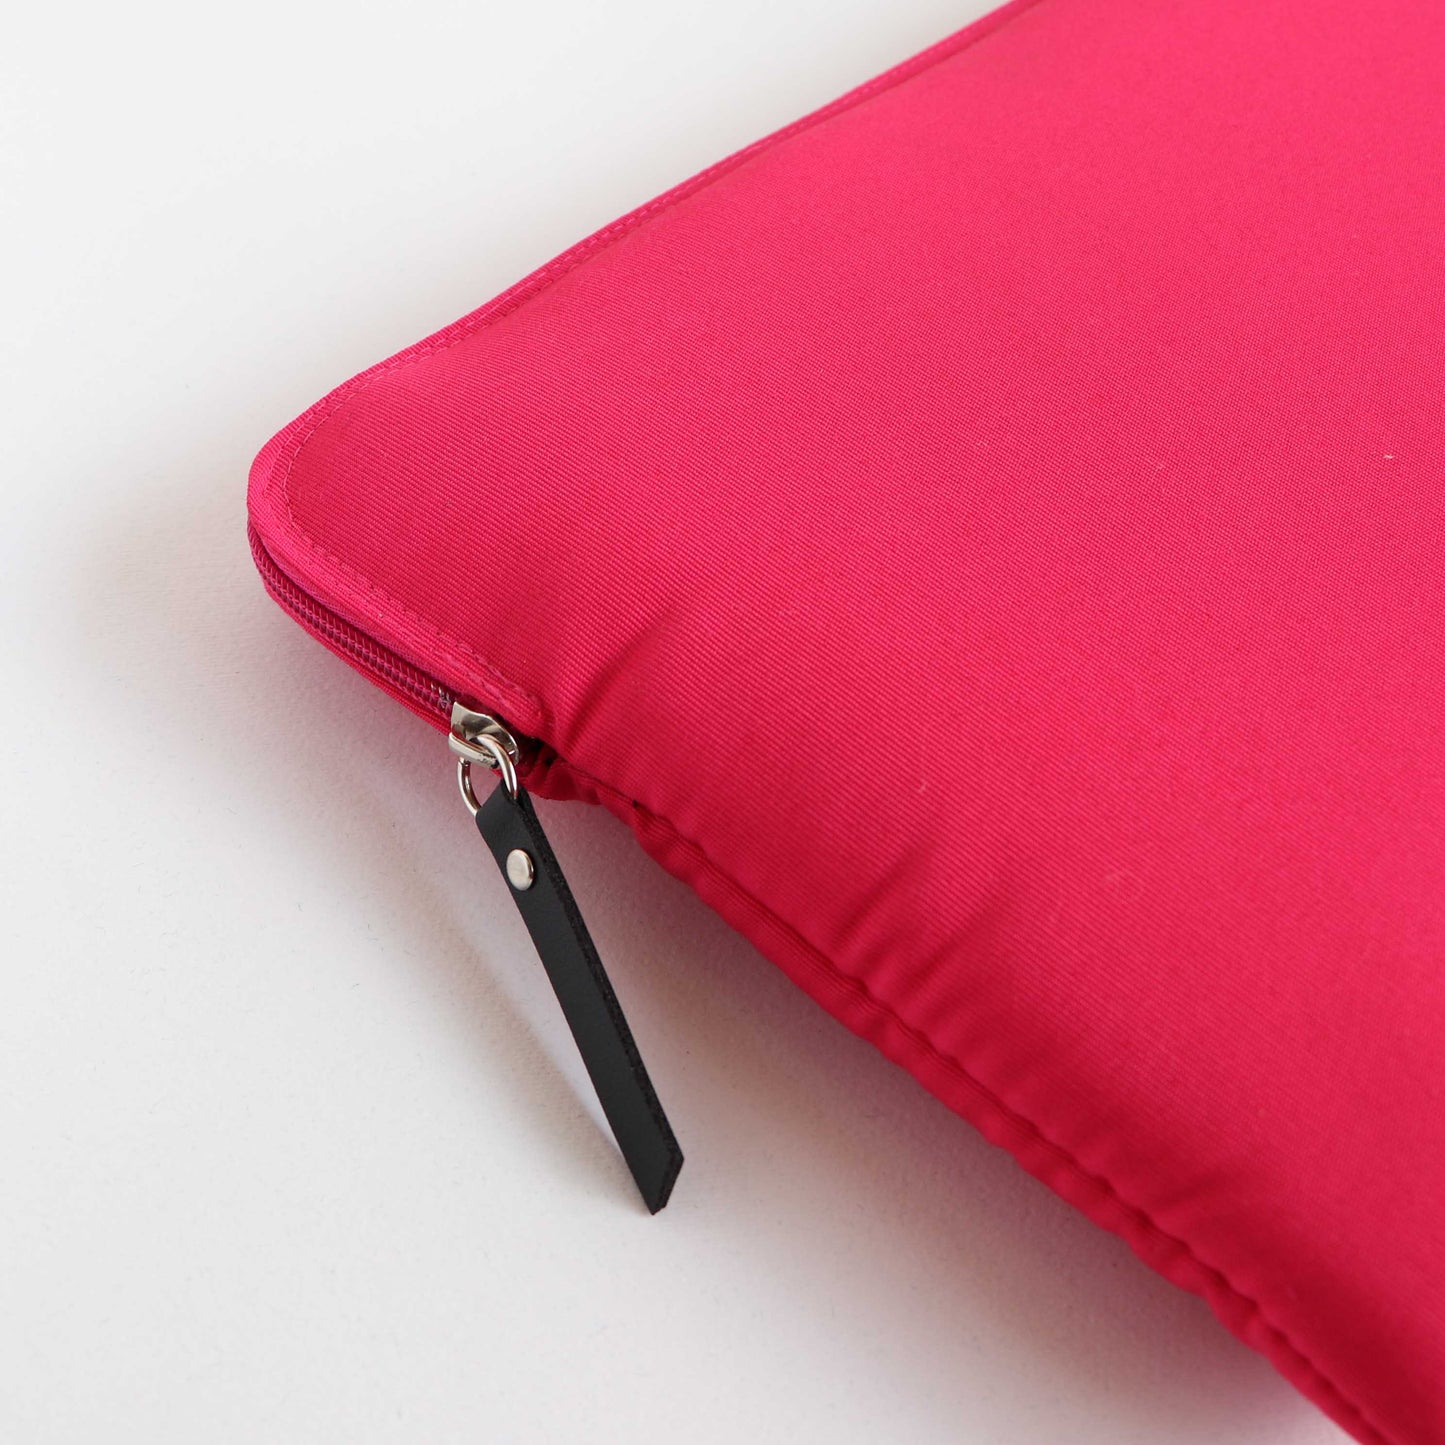 Hot Pink Laptop Sleeve